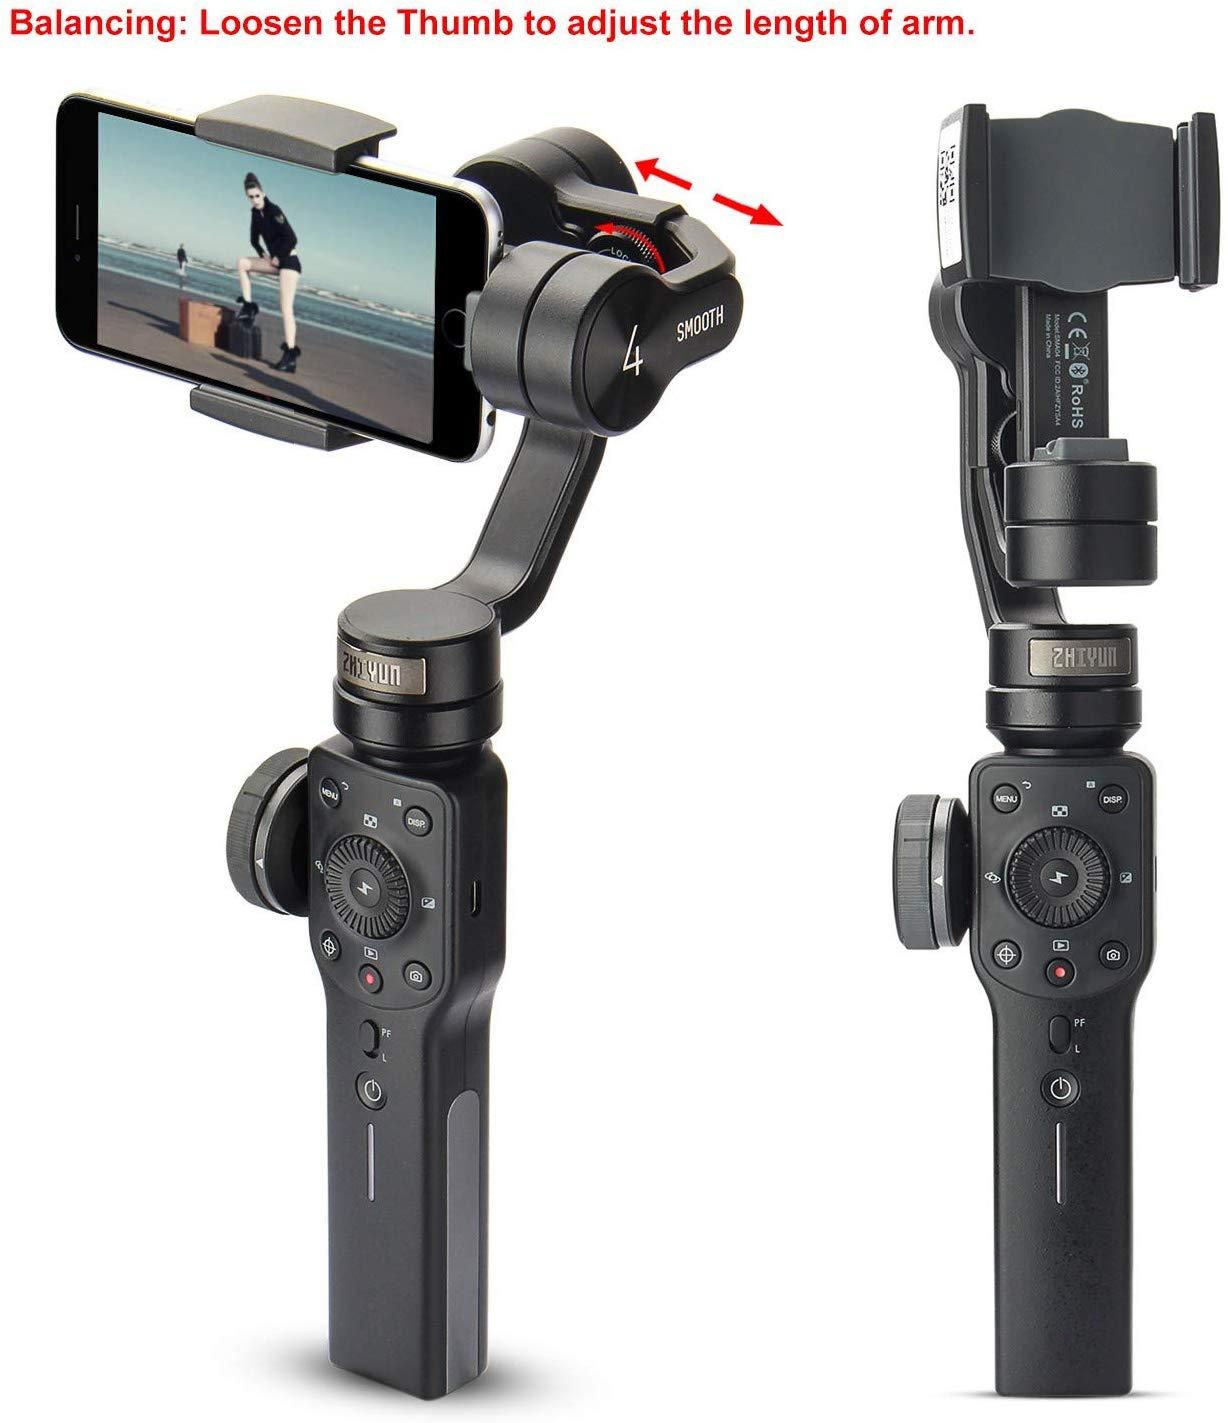 Zhiyun Smooth 4 3-Axis Handheld Gimbal Stabilizer for Vlogging/Youtube - Pro Travel Gear ShopGimbalzhi yun